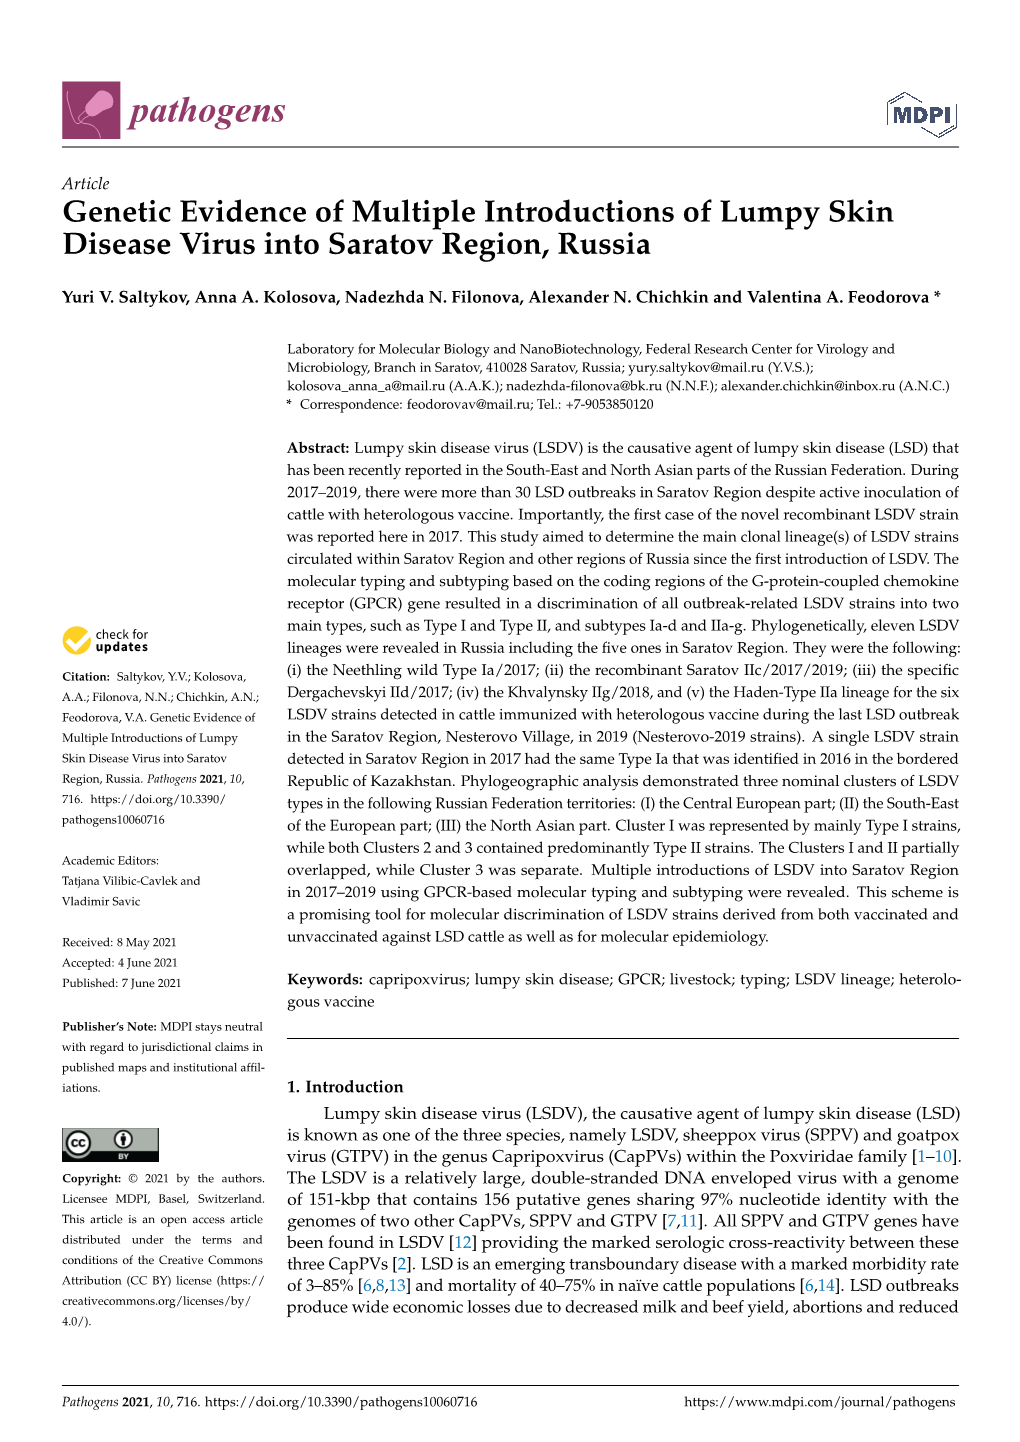 Genetic Evidence of Multiple Introductions of Lumpy Skin Disease Virus Into Saratov Region, Russia